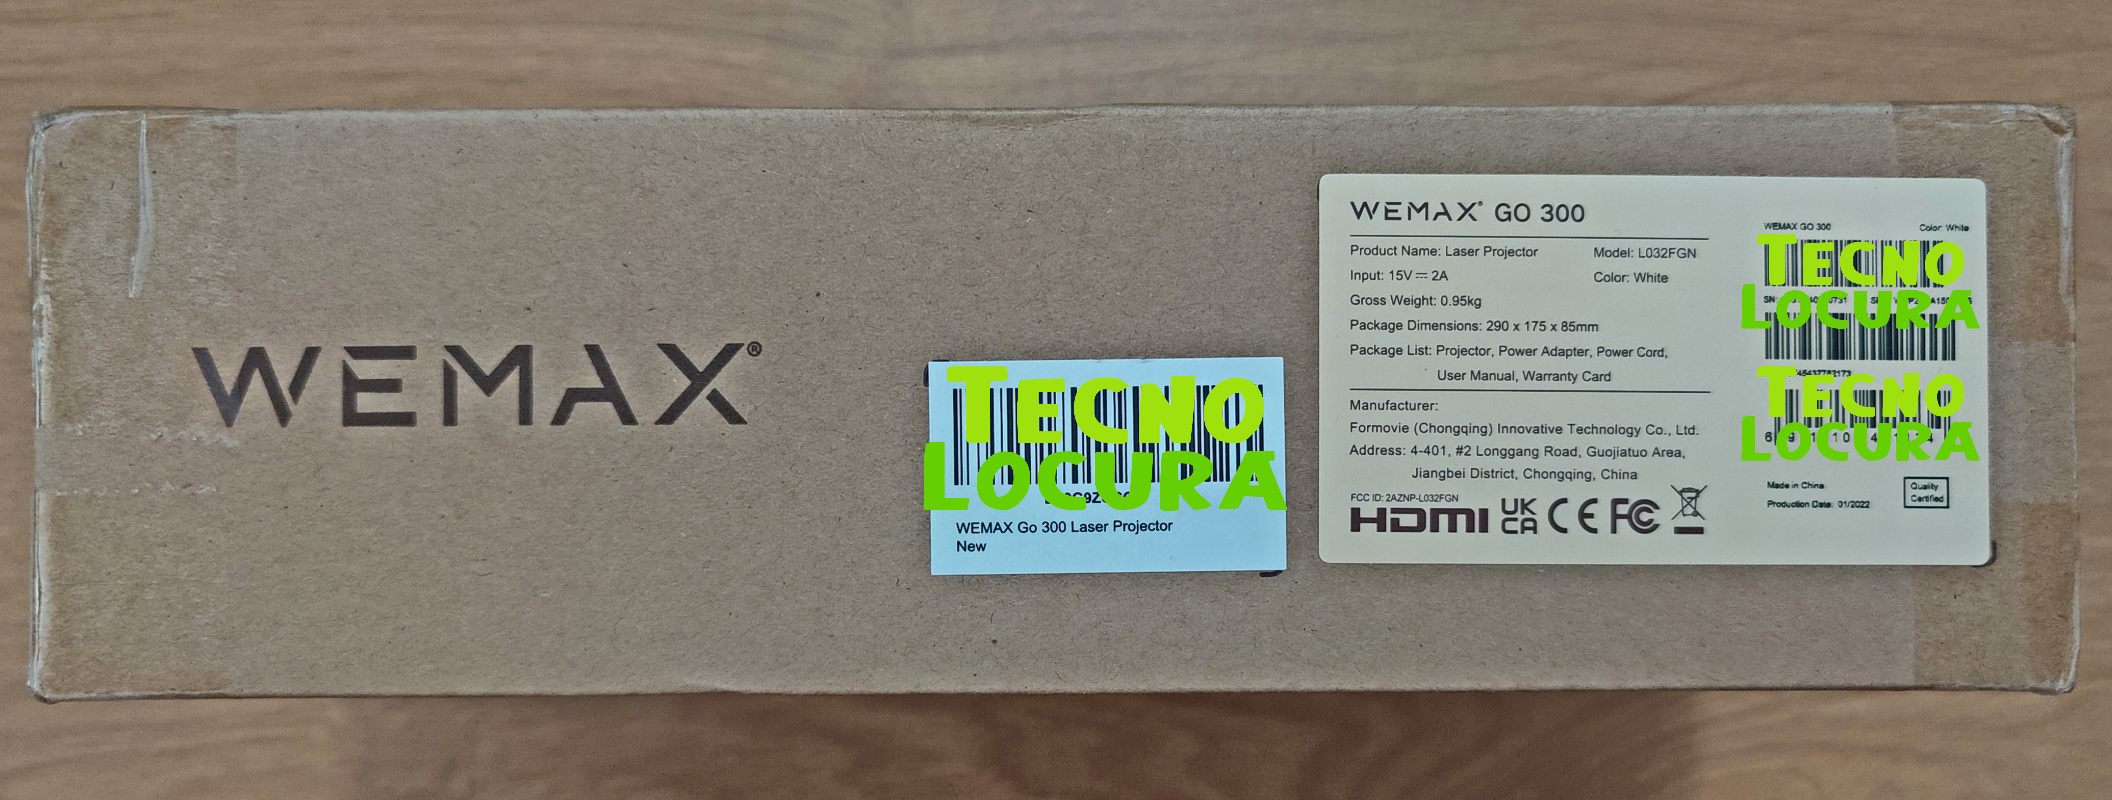 WEMAX-GO-300-unboxing